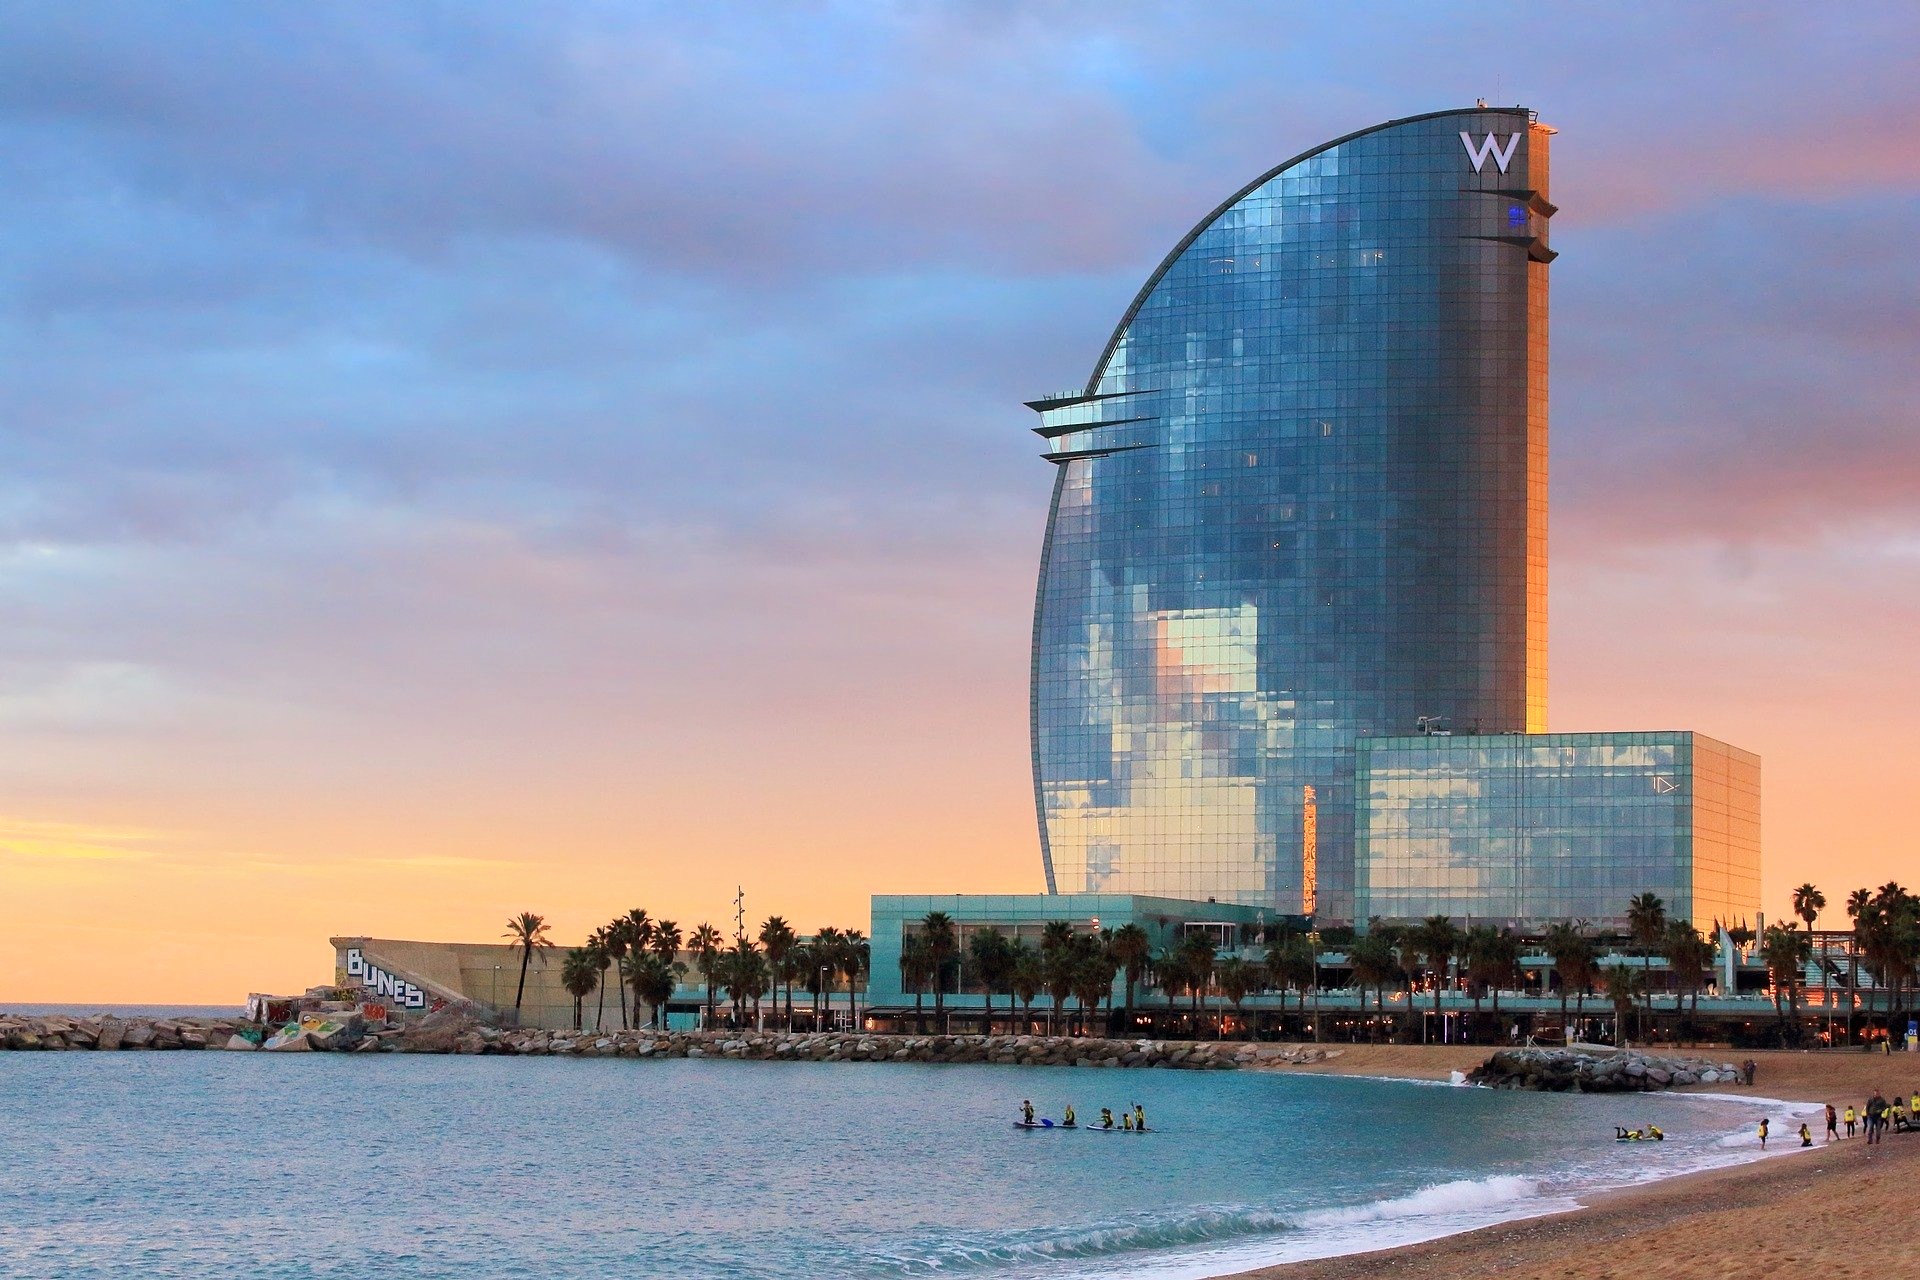 Mejores ofertas de hoteles en Barcelona actualizadas diariamente